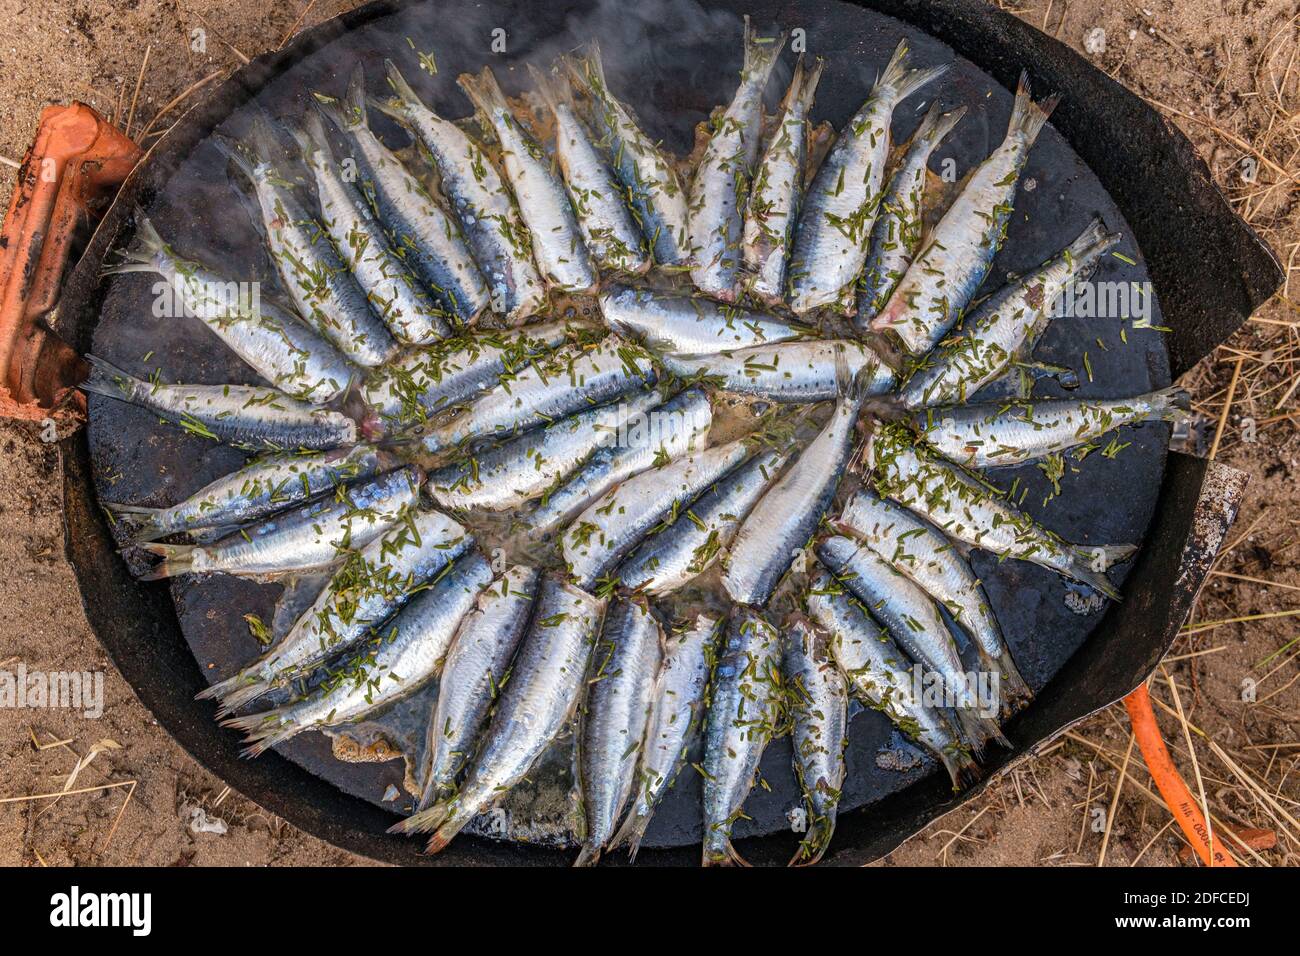 France, Charente Maritime, Oleron island, grilled sardines (Sardina pilchardus) Stock Photo